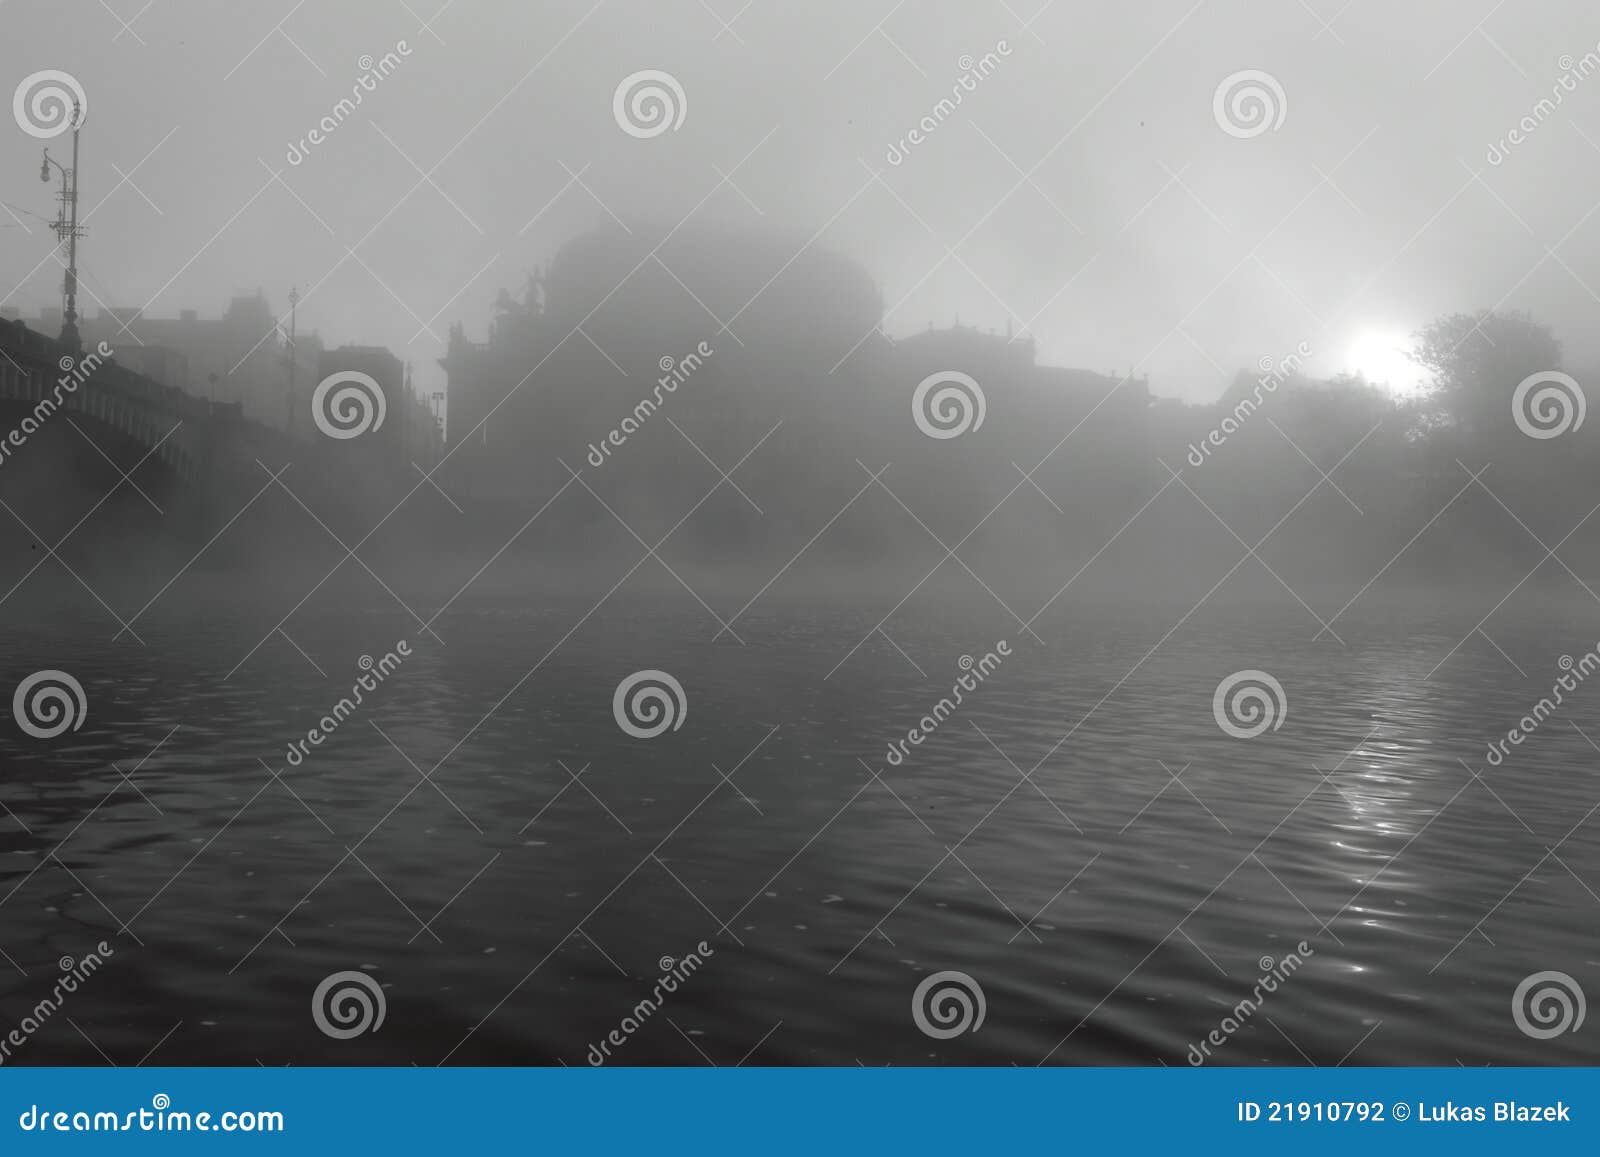 Mist over Prague. The river Moldau veiled in mist in Prague, Czech Republic.